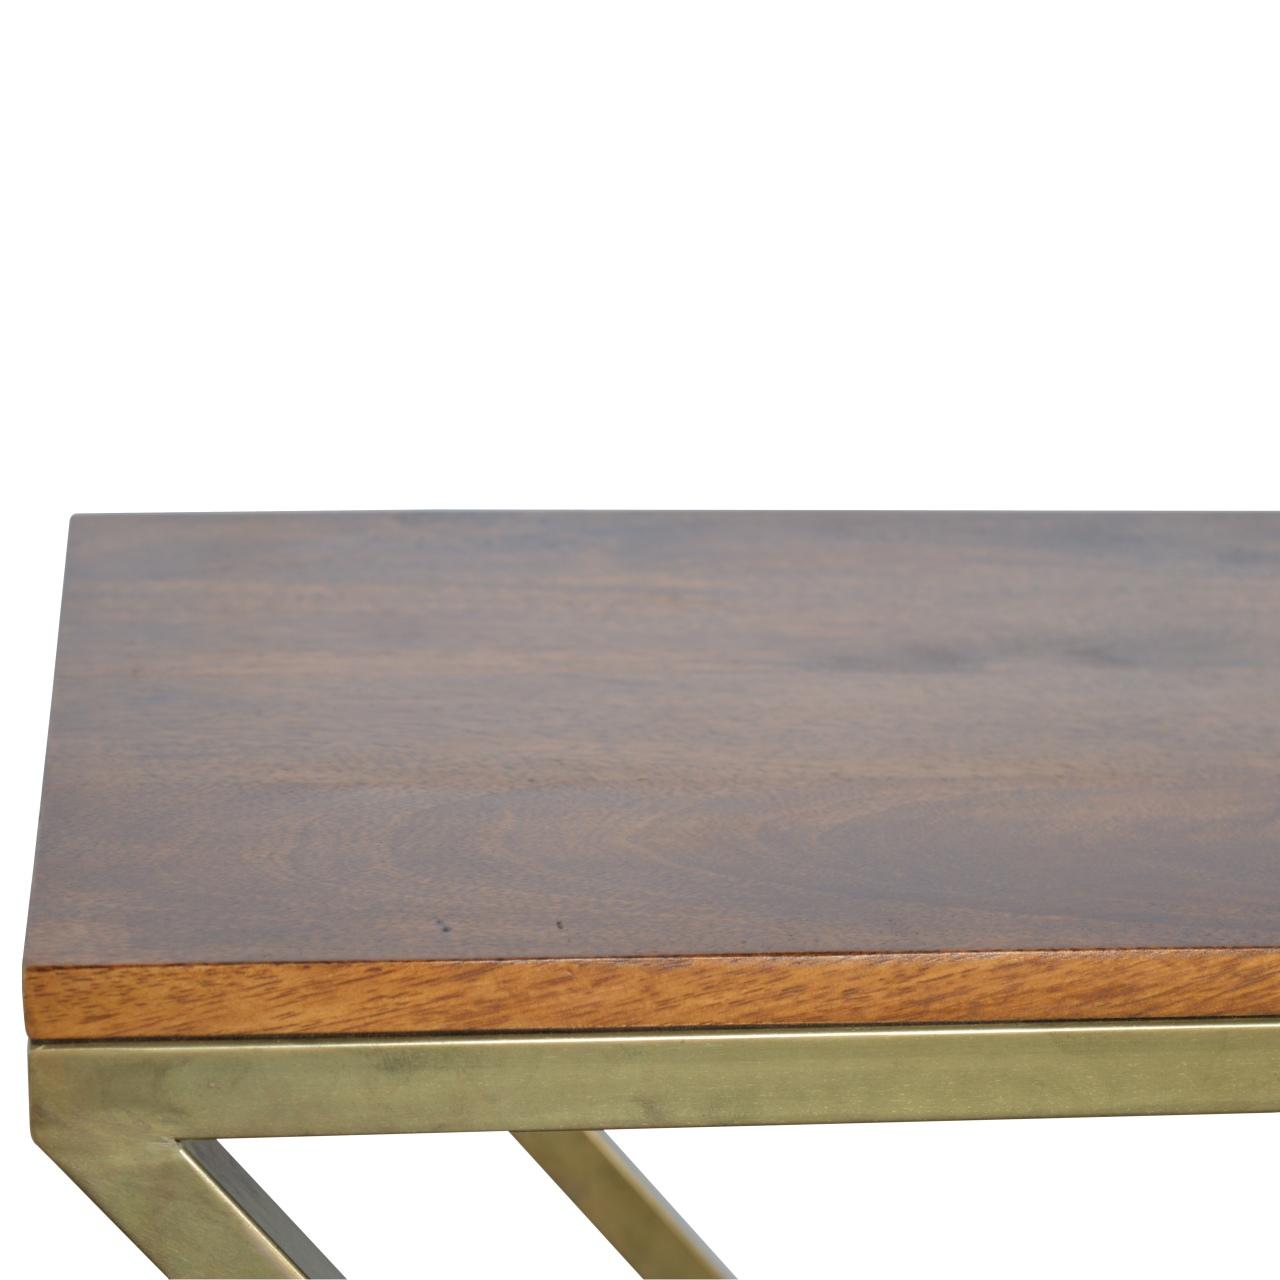 Z Shaped Golden Side Table